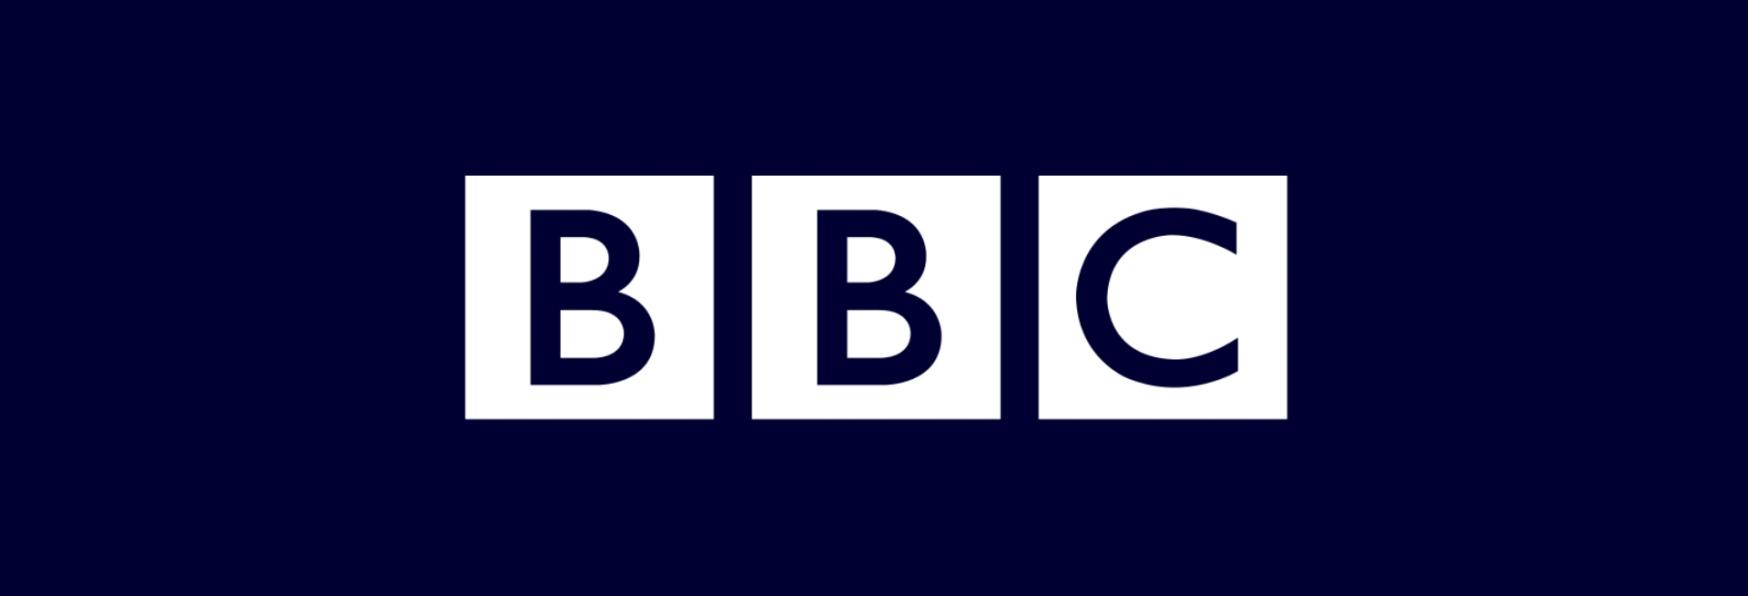 The Way: Luke Evans e Callum Scott Howells nel Cast dell'inedita Serie TV BBC